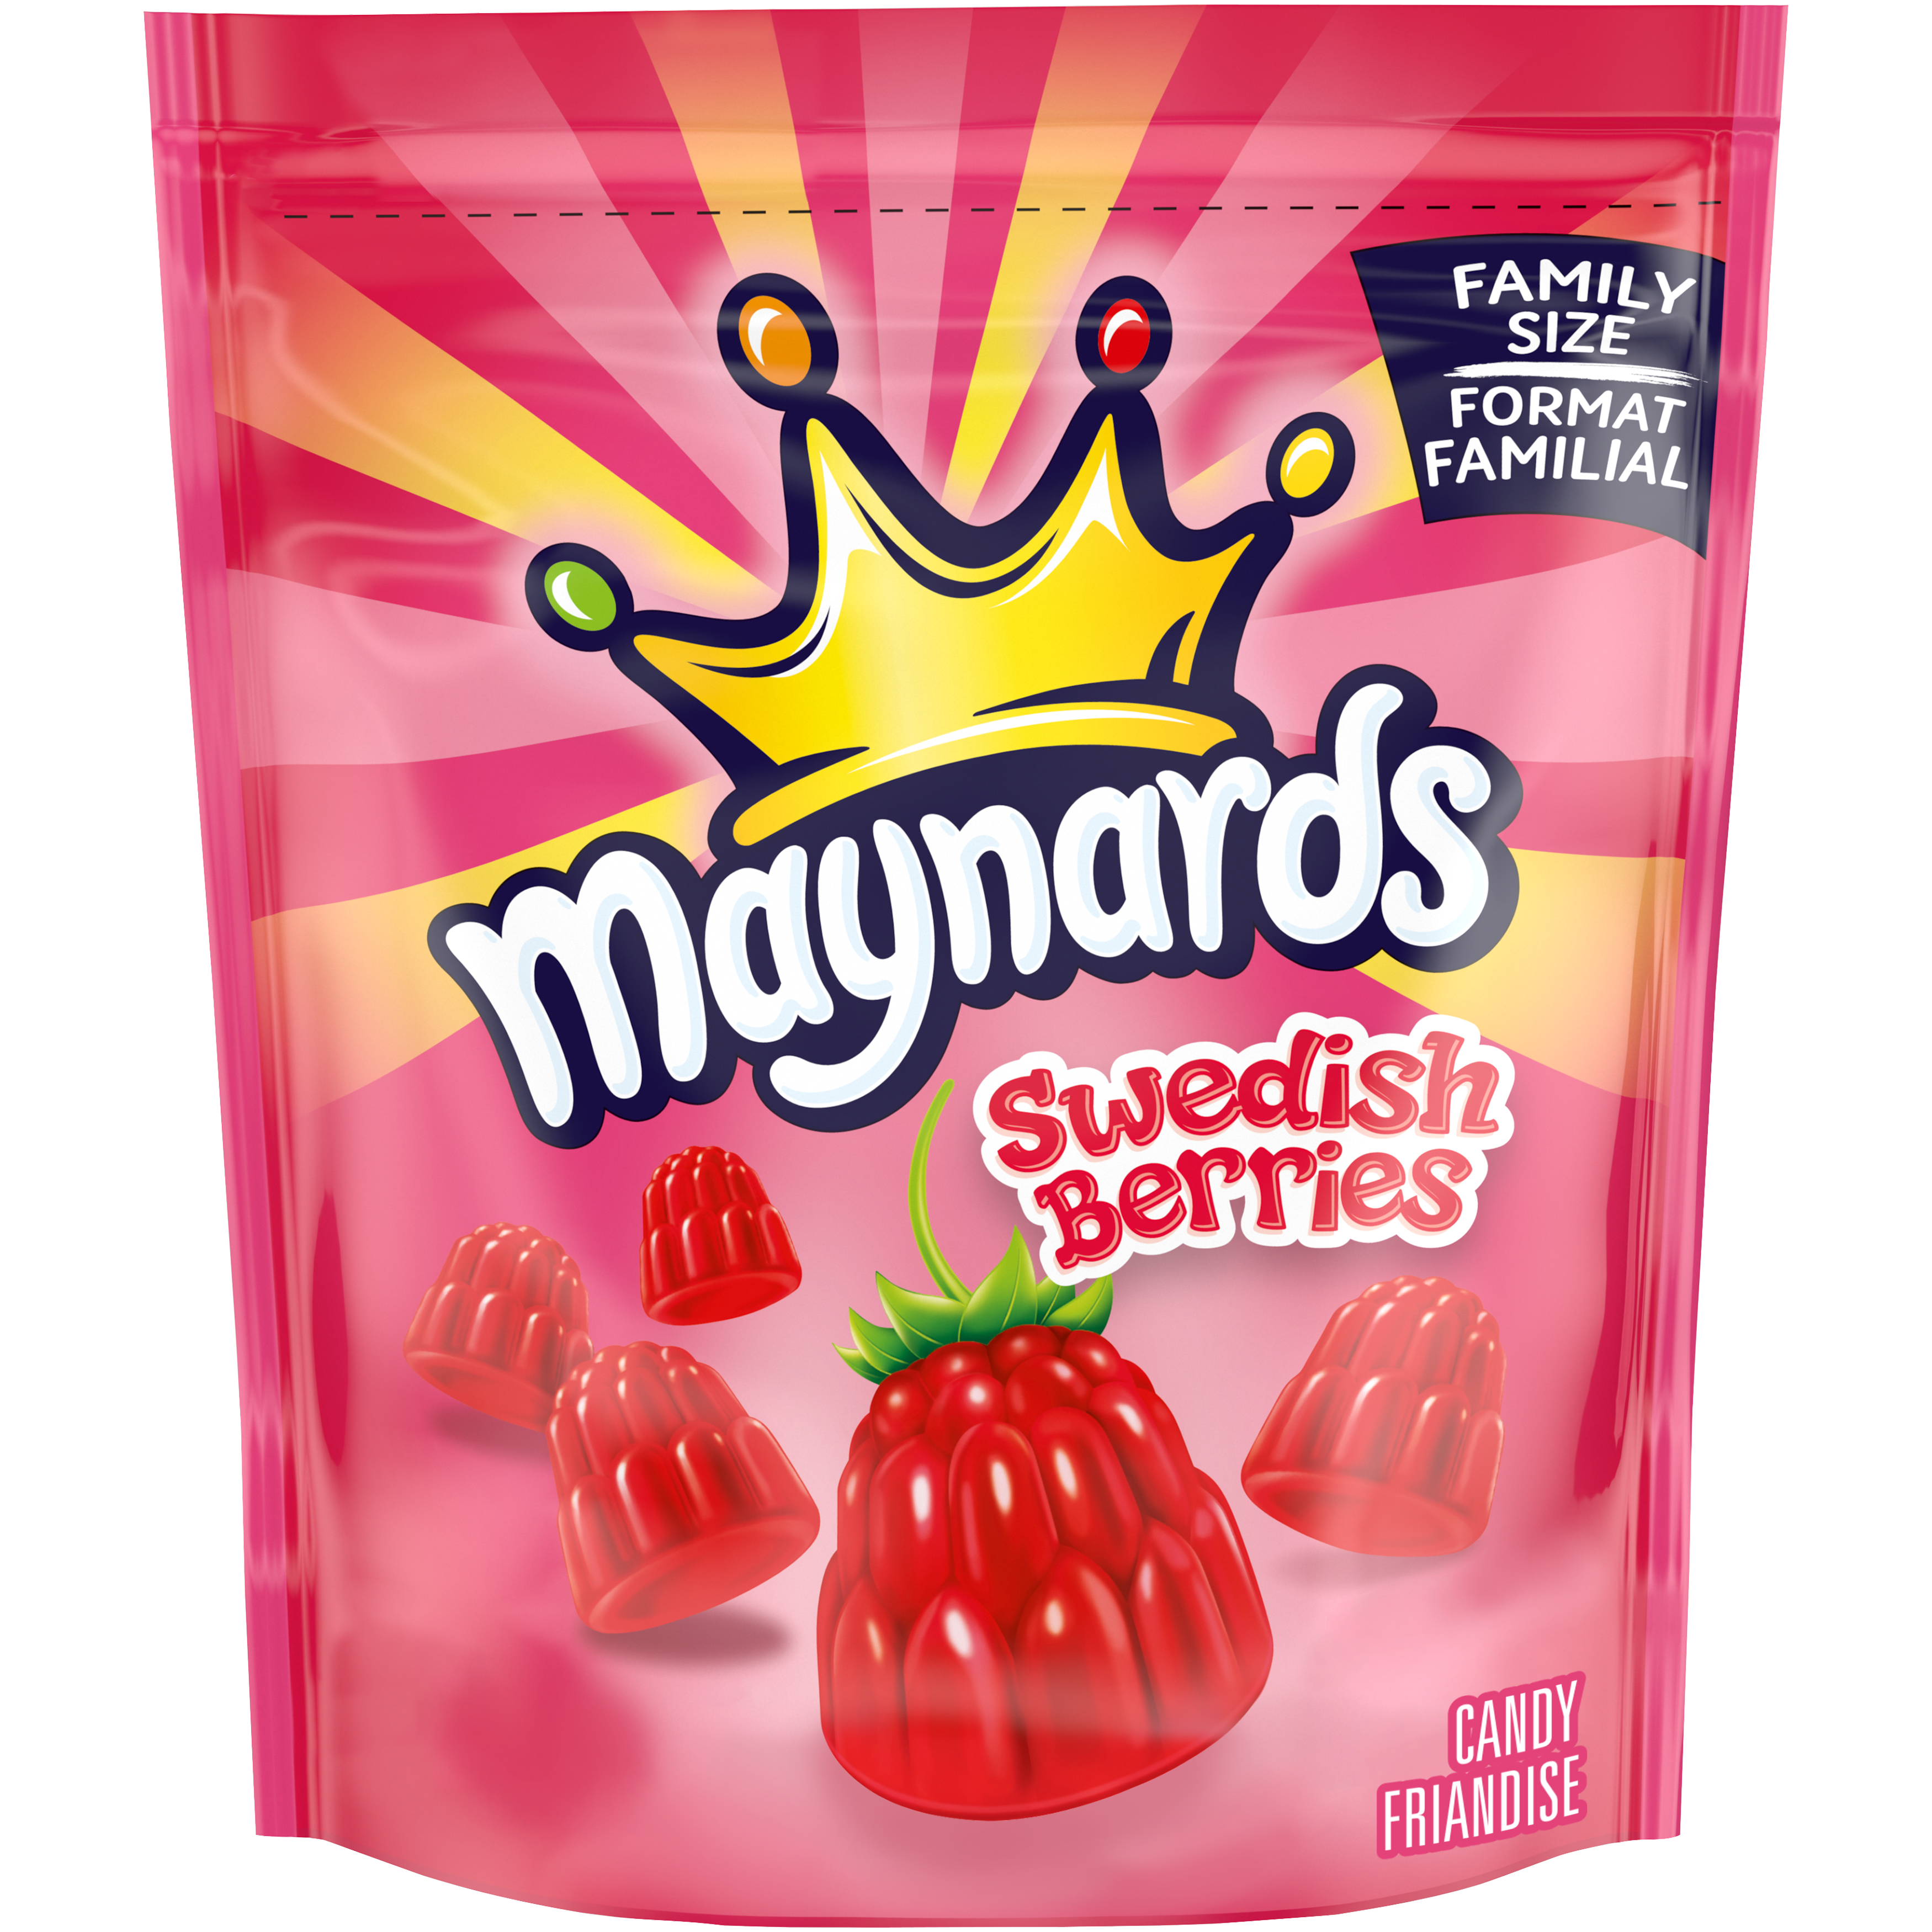 Maynards Swedish Berries Gummy Candy, 816g